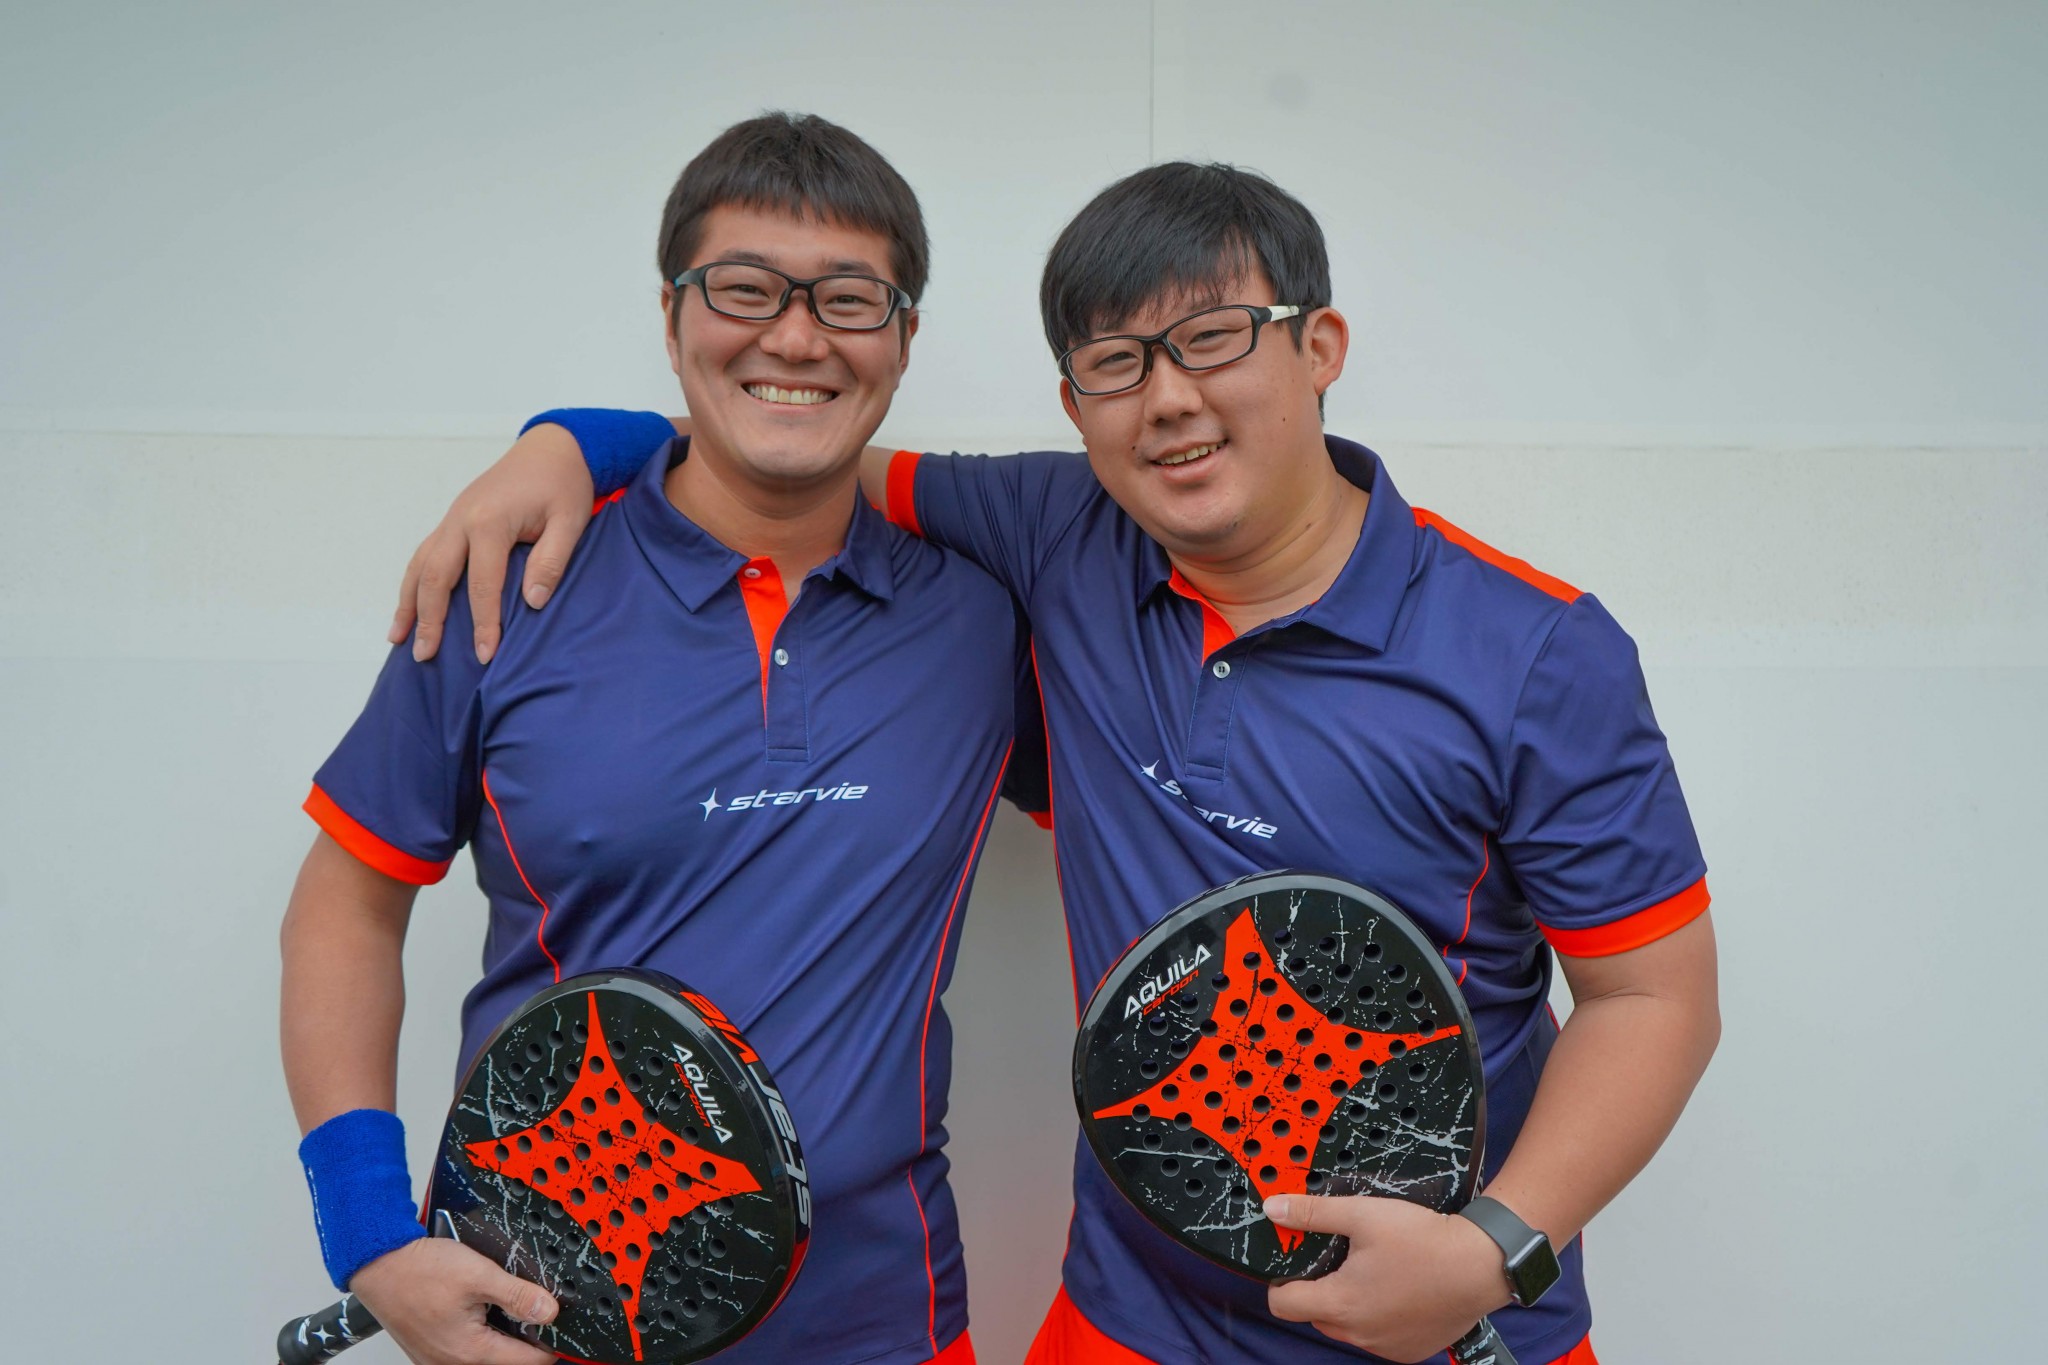 Eiichiro Okuyama e Tomoaki Murasawa, nuevos jugadores japoneses del team StarVie